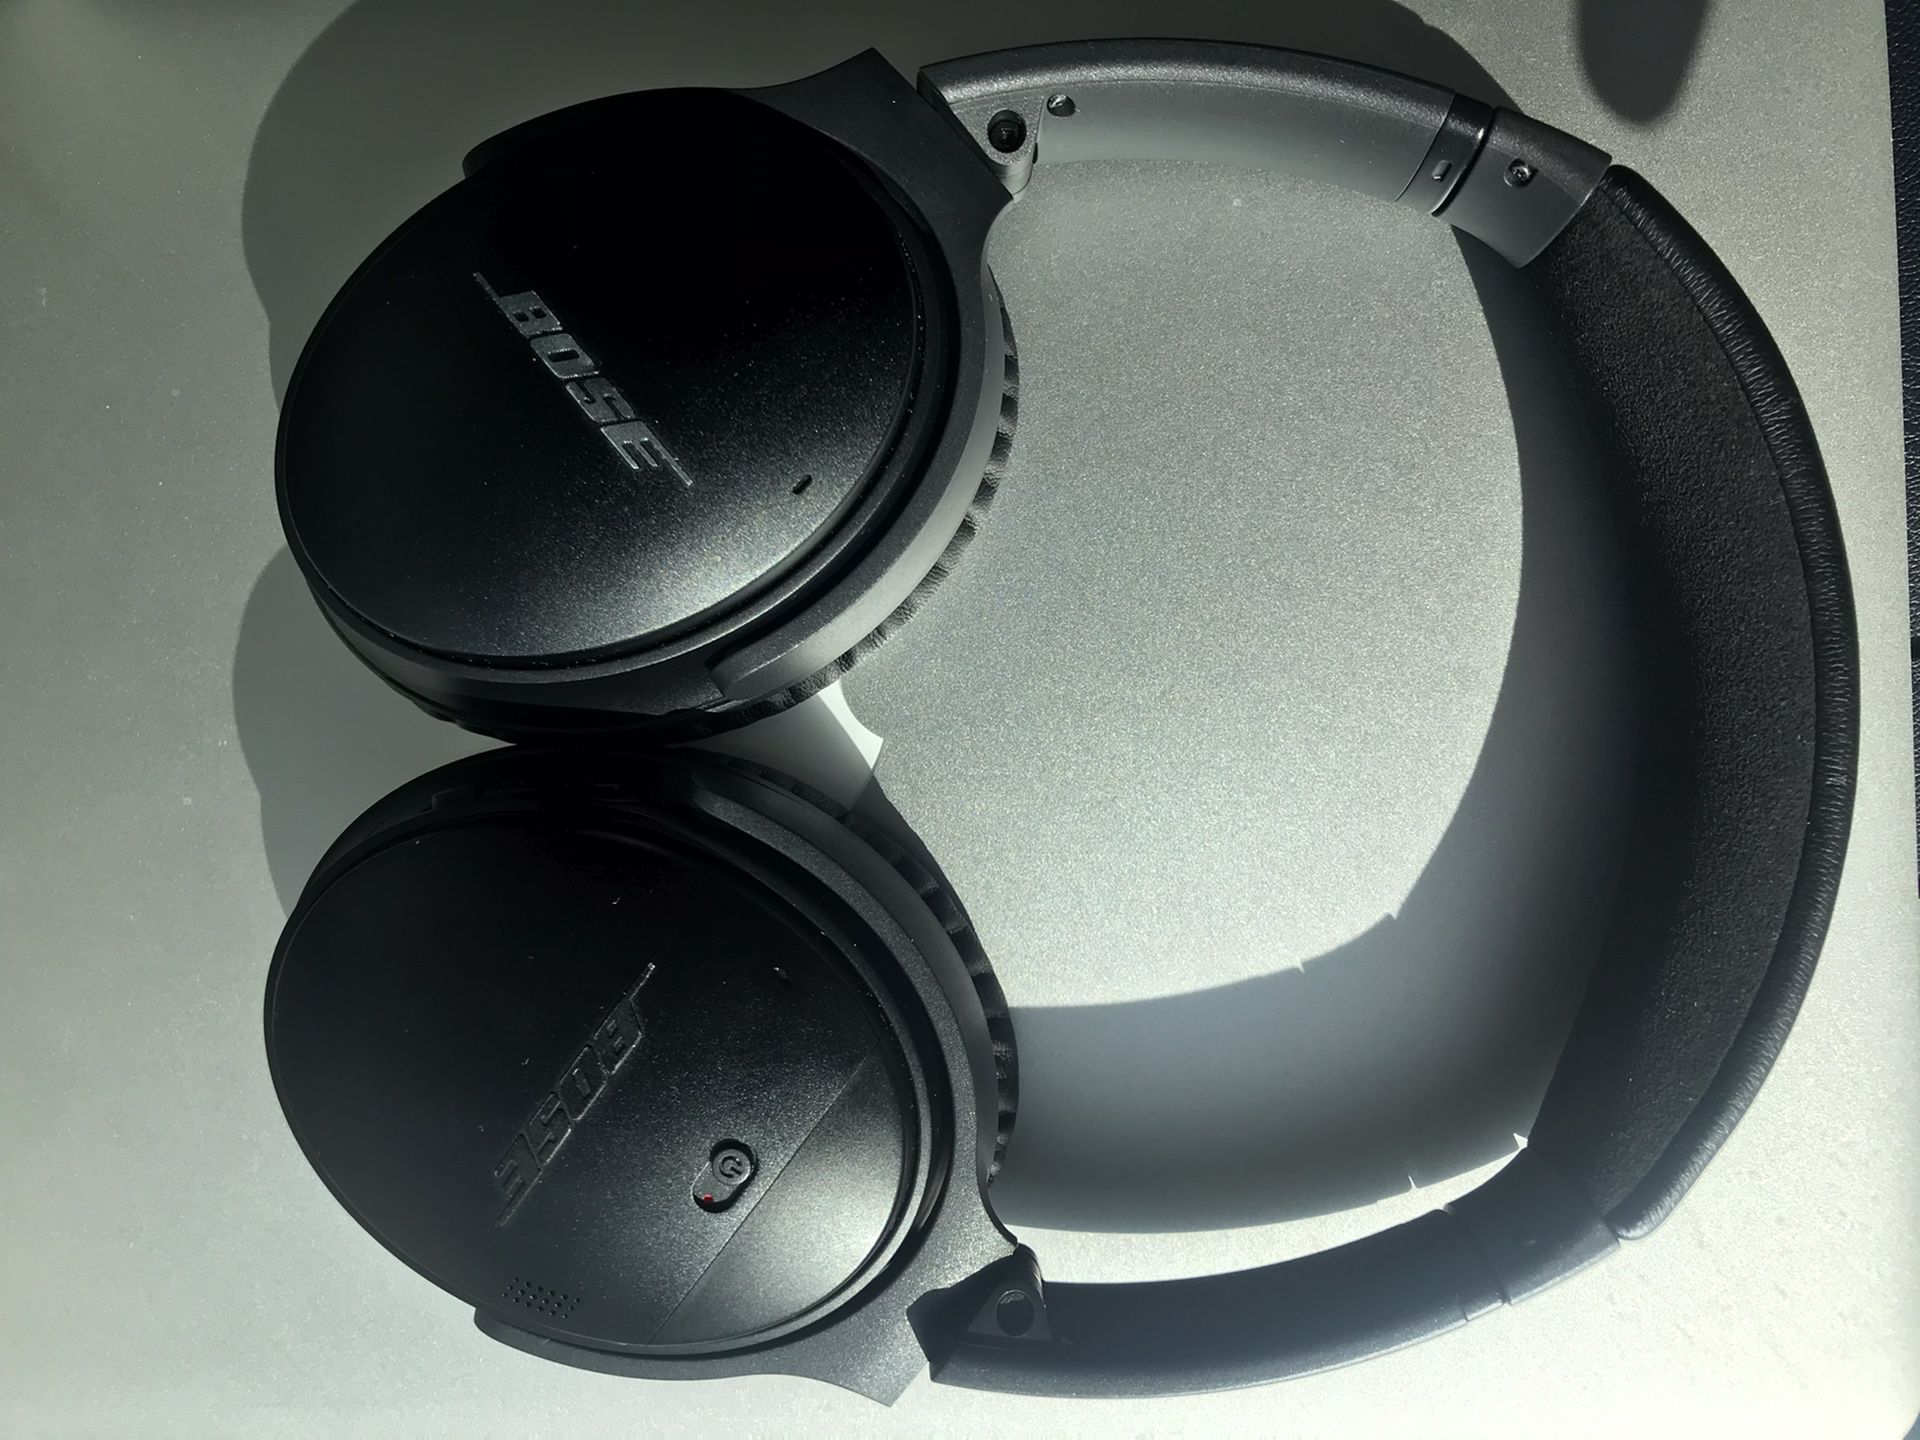 Bose QuietComfort 35 Wireless Noise Cancelling Headphones - Black